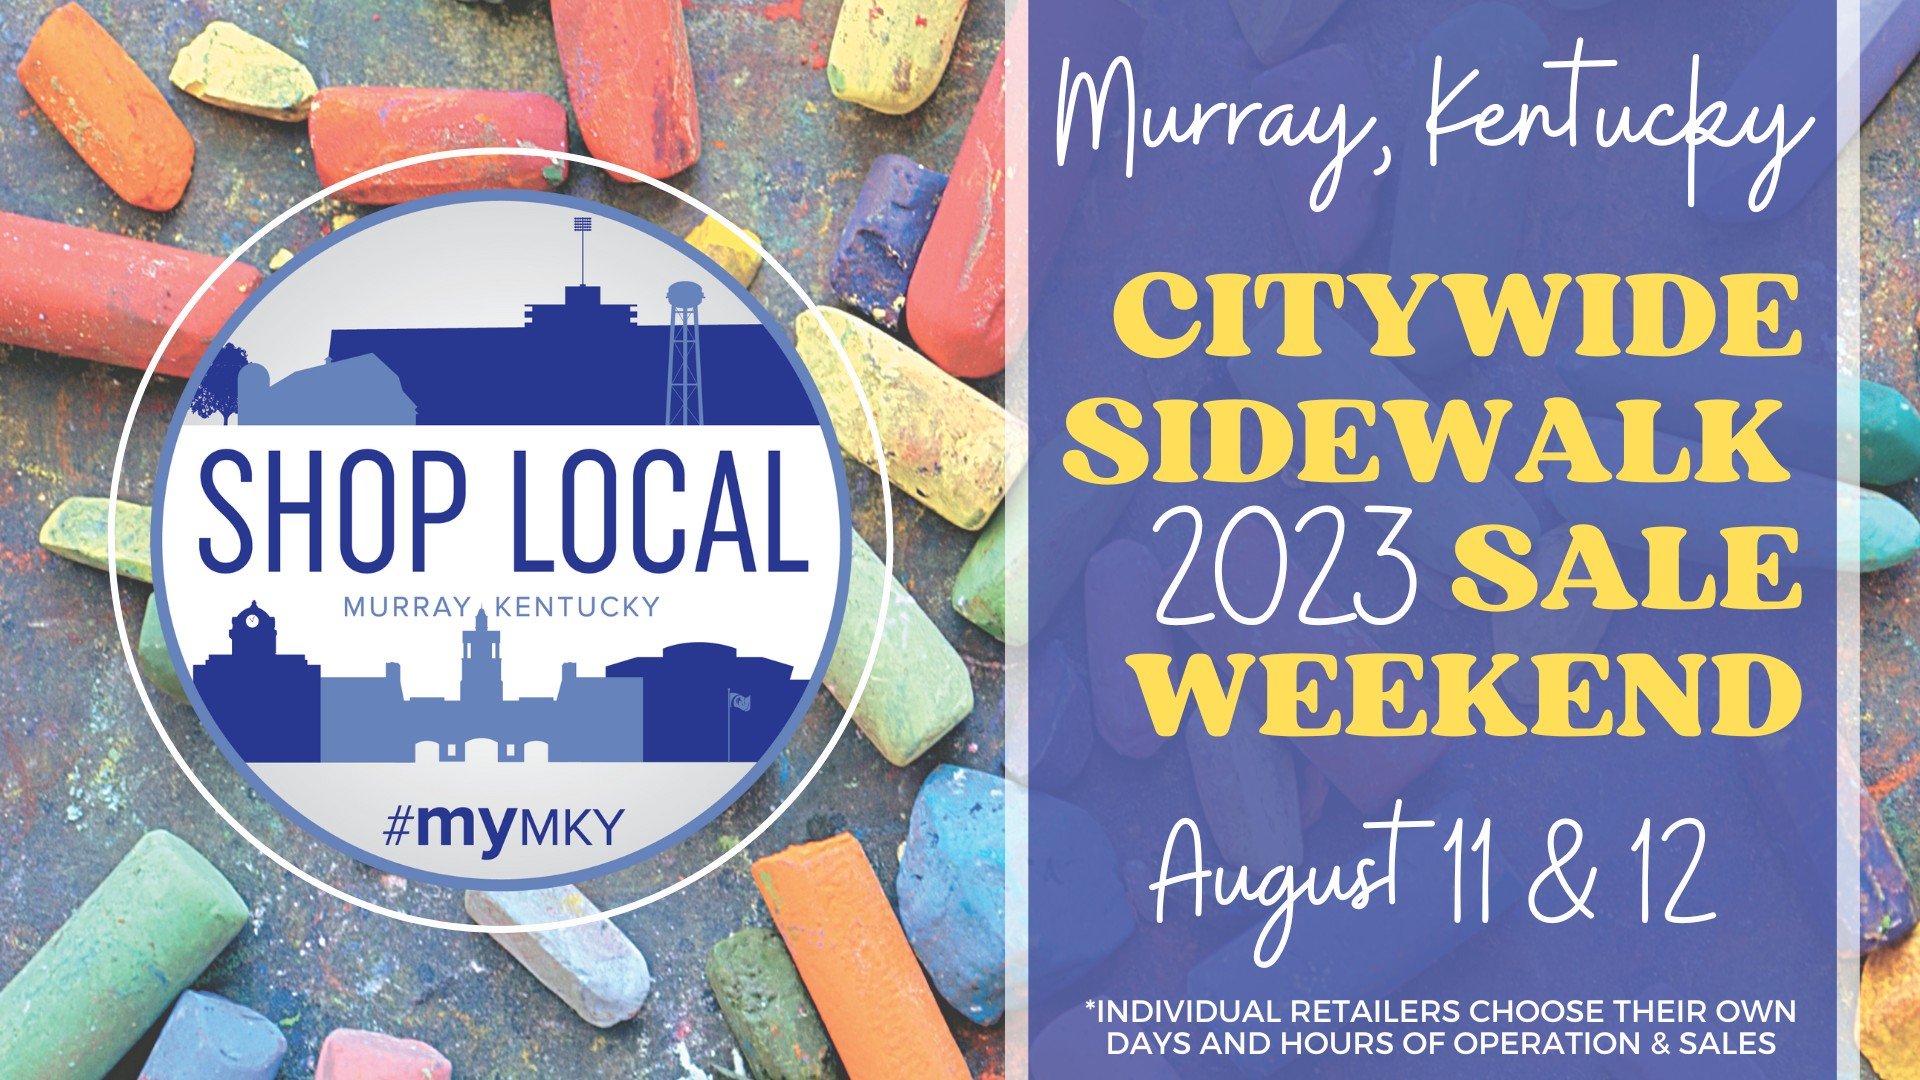 City Sidewalk Sale Weekend — Murray, Kentucky Tourism